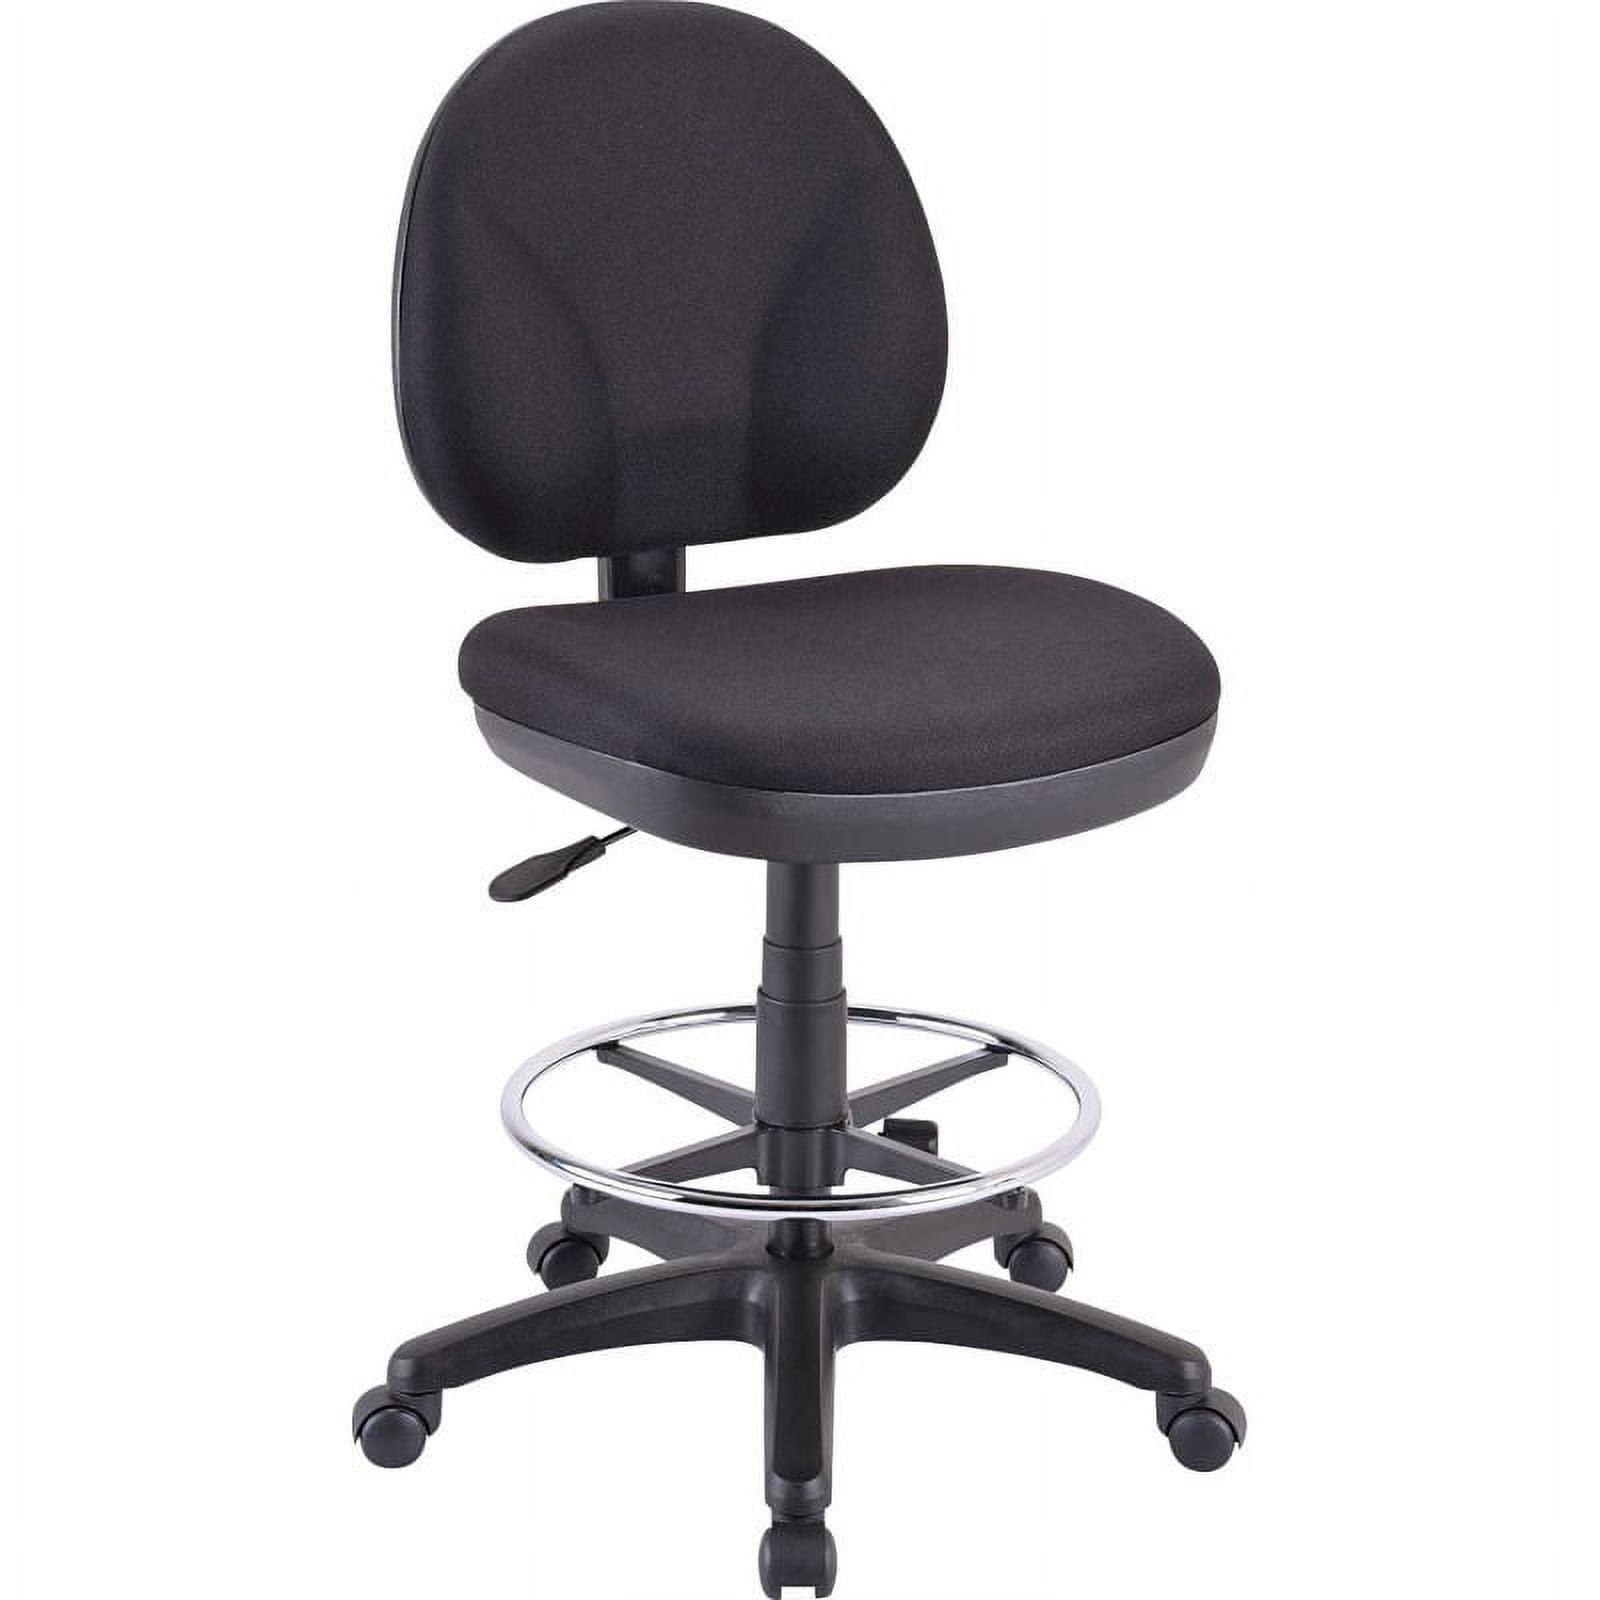 ErgoFlex Black Fabric and Plastic Adjustable Swivel Office Chair